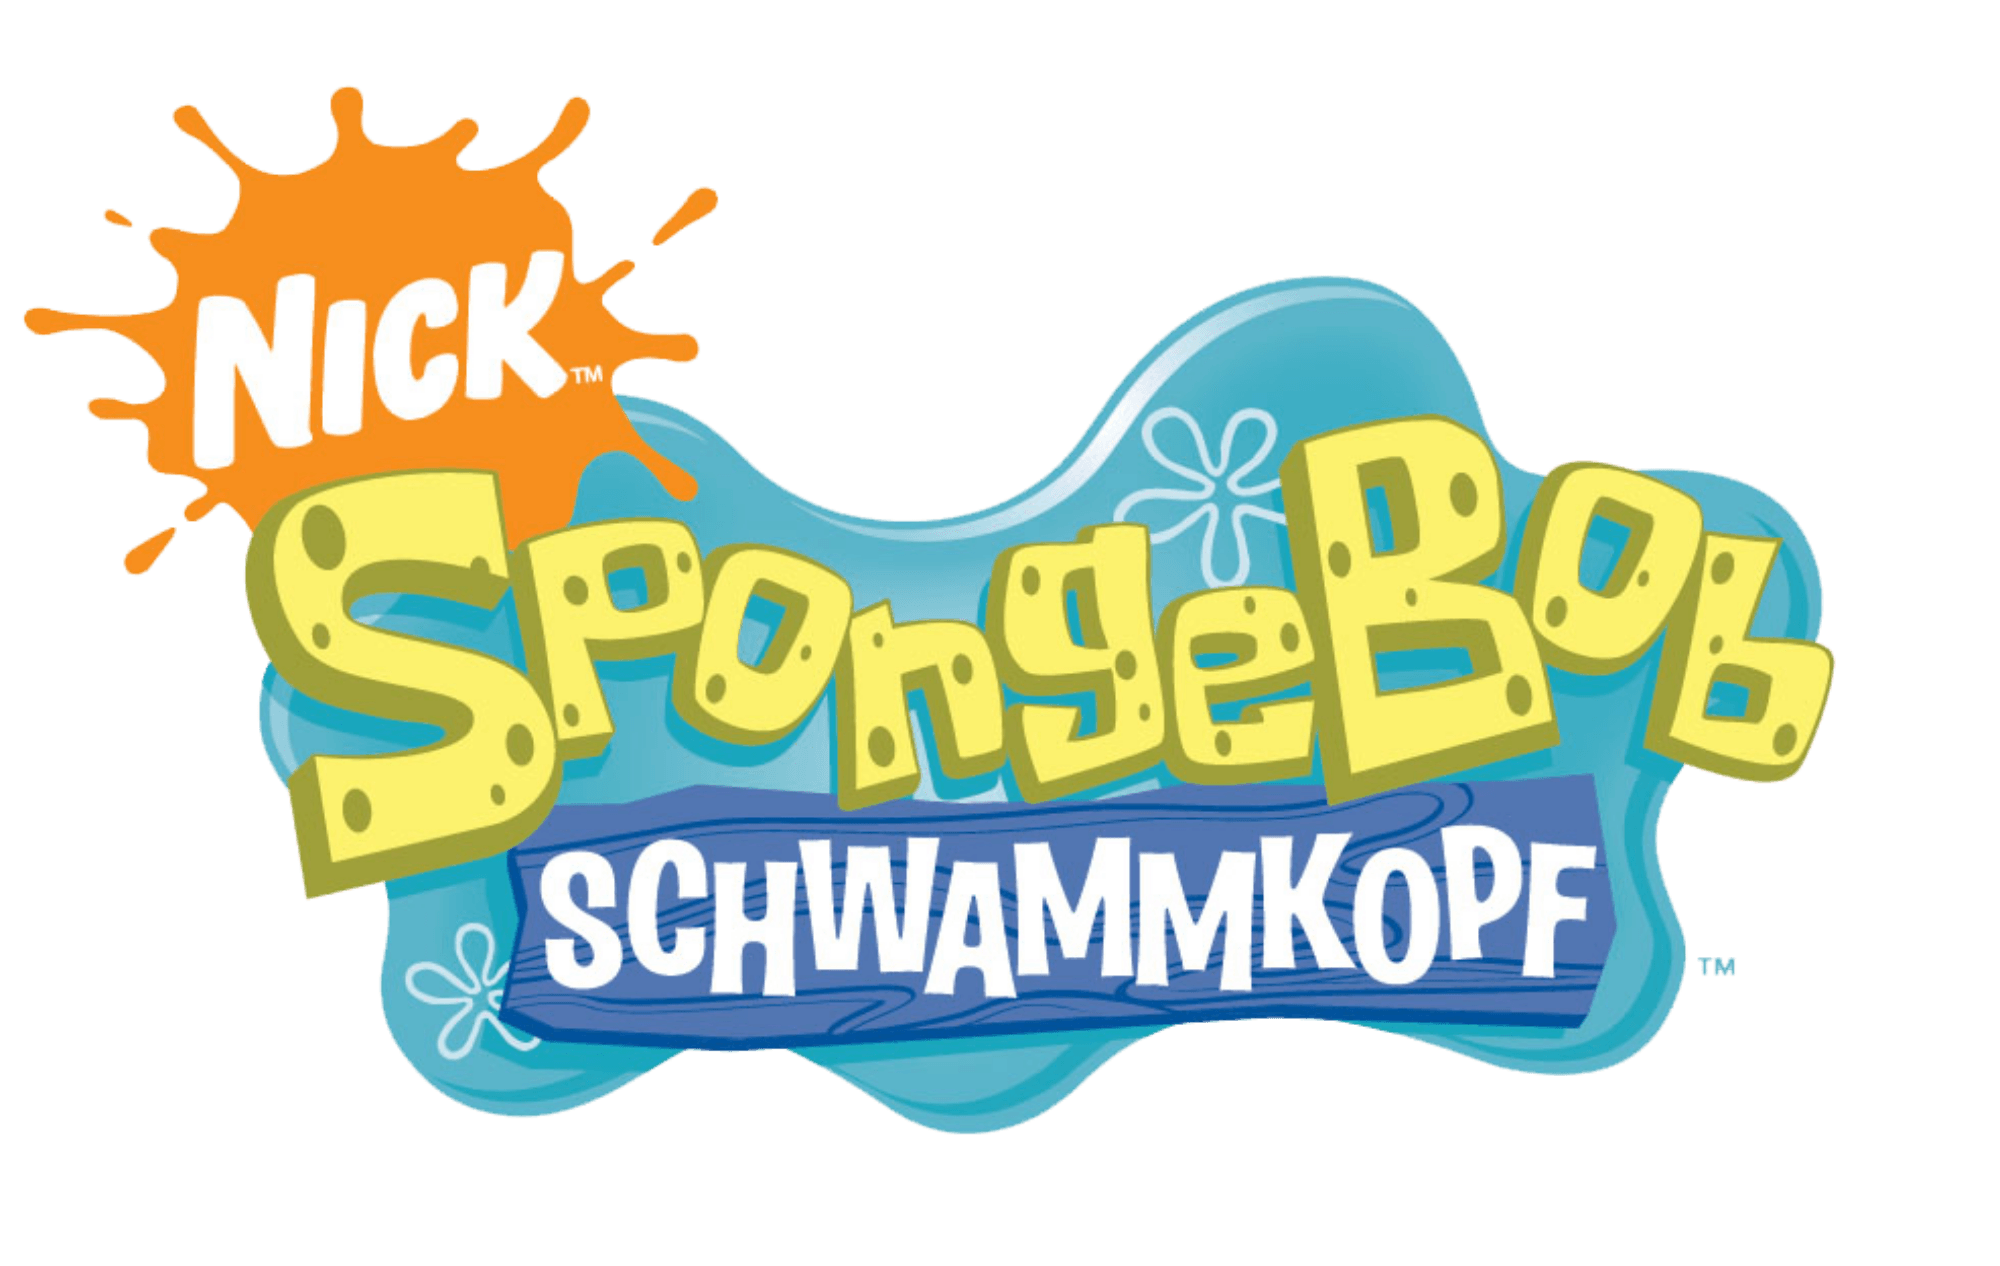 Spongebob Logo - Spongebob squarepants Logos